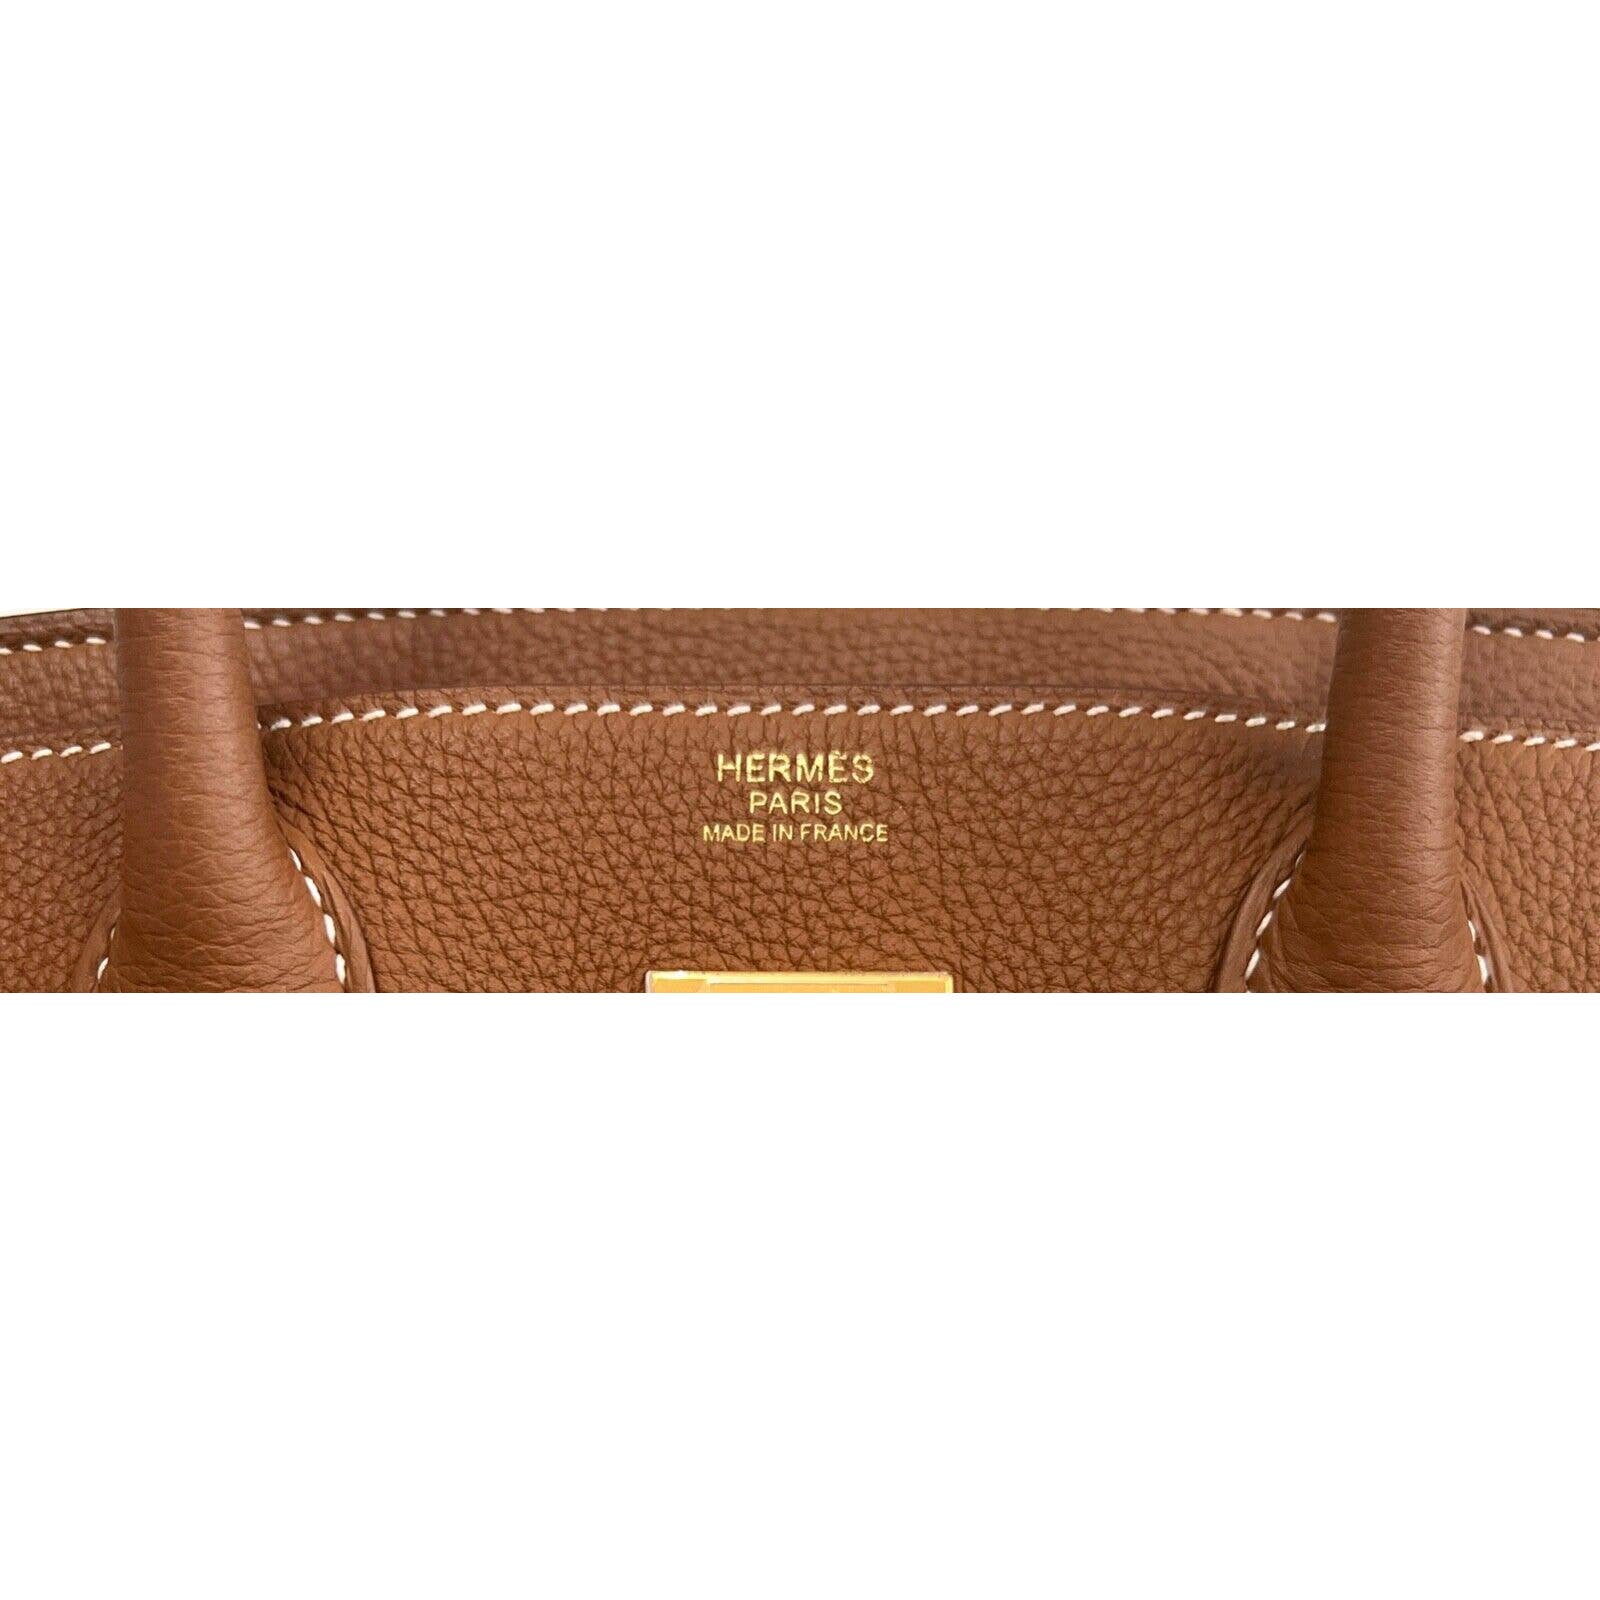 Hermès - Authenticated Birkin 30 Handbag - Leather Camel Plain for Women, Very Good Condition